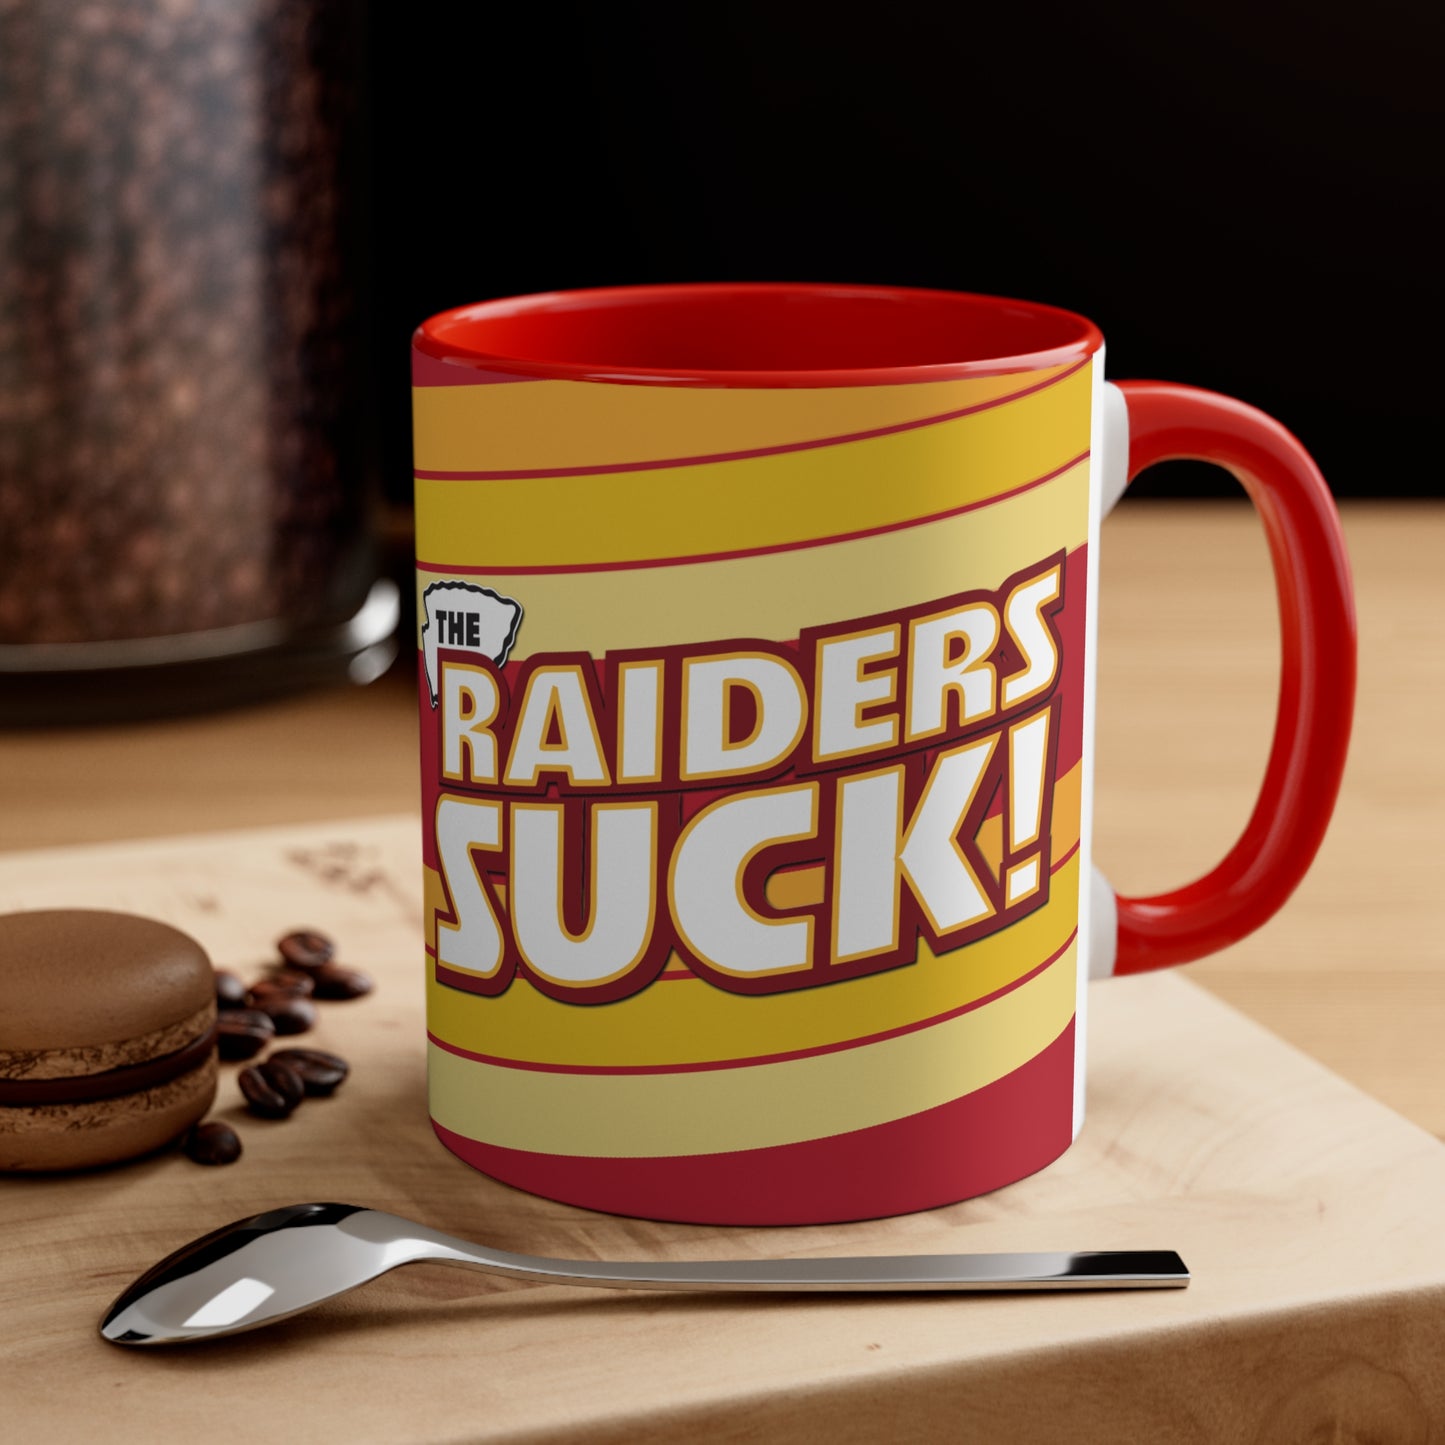 That Vegas Team Sucks - Accent Coffee Mug, 11oz